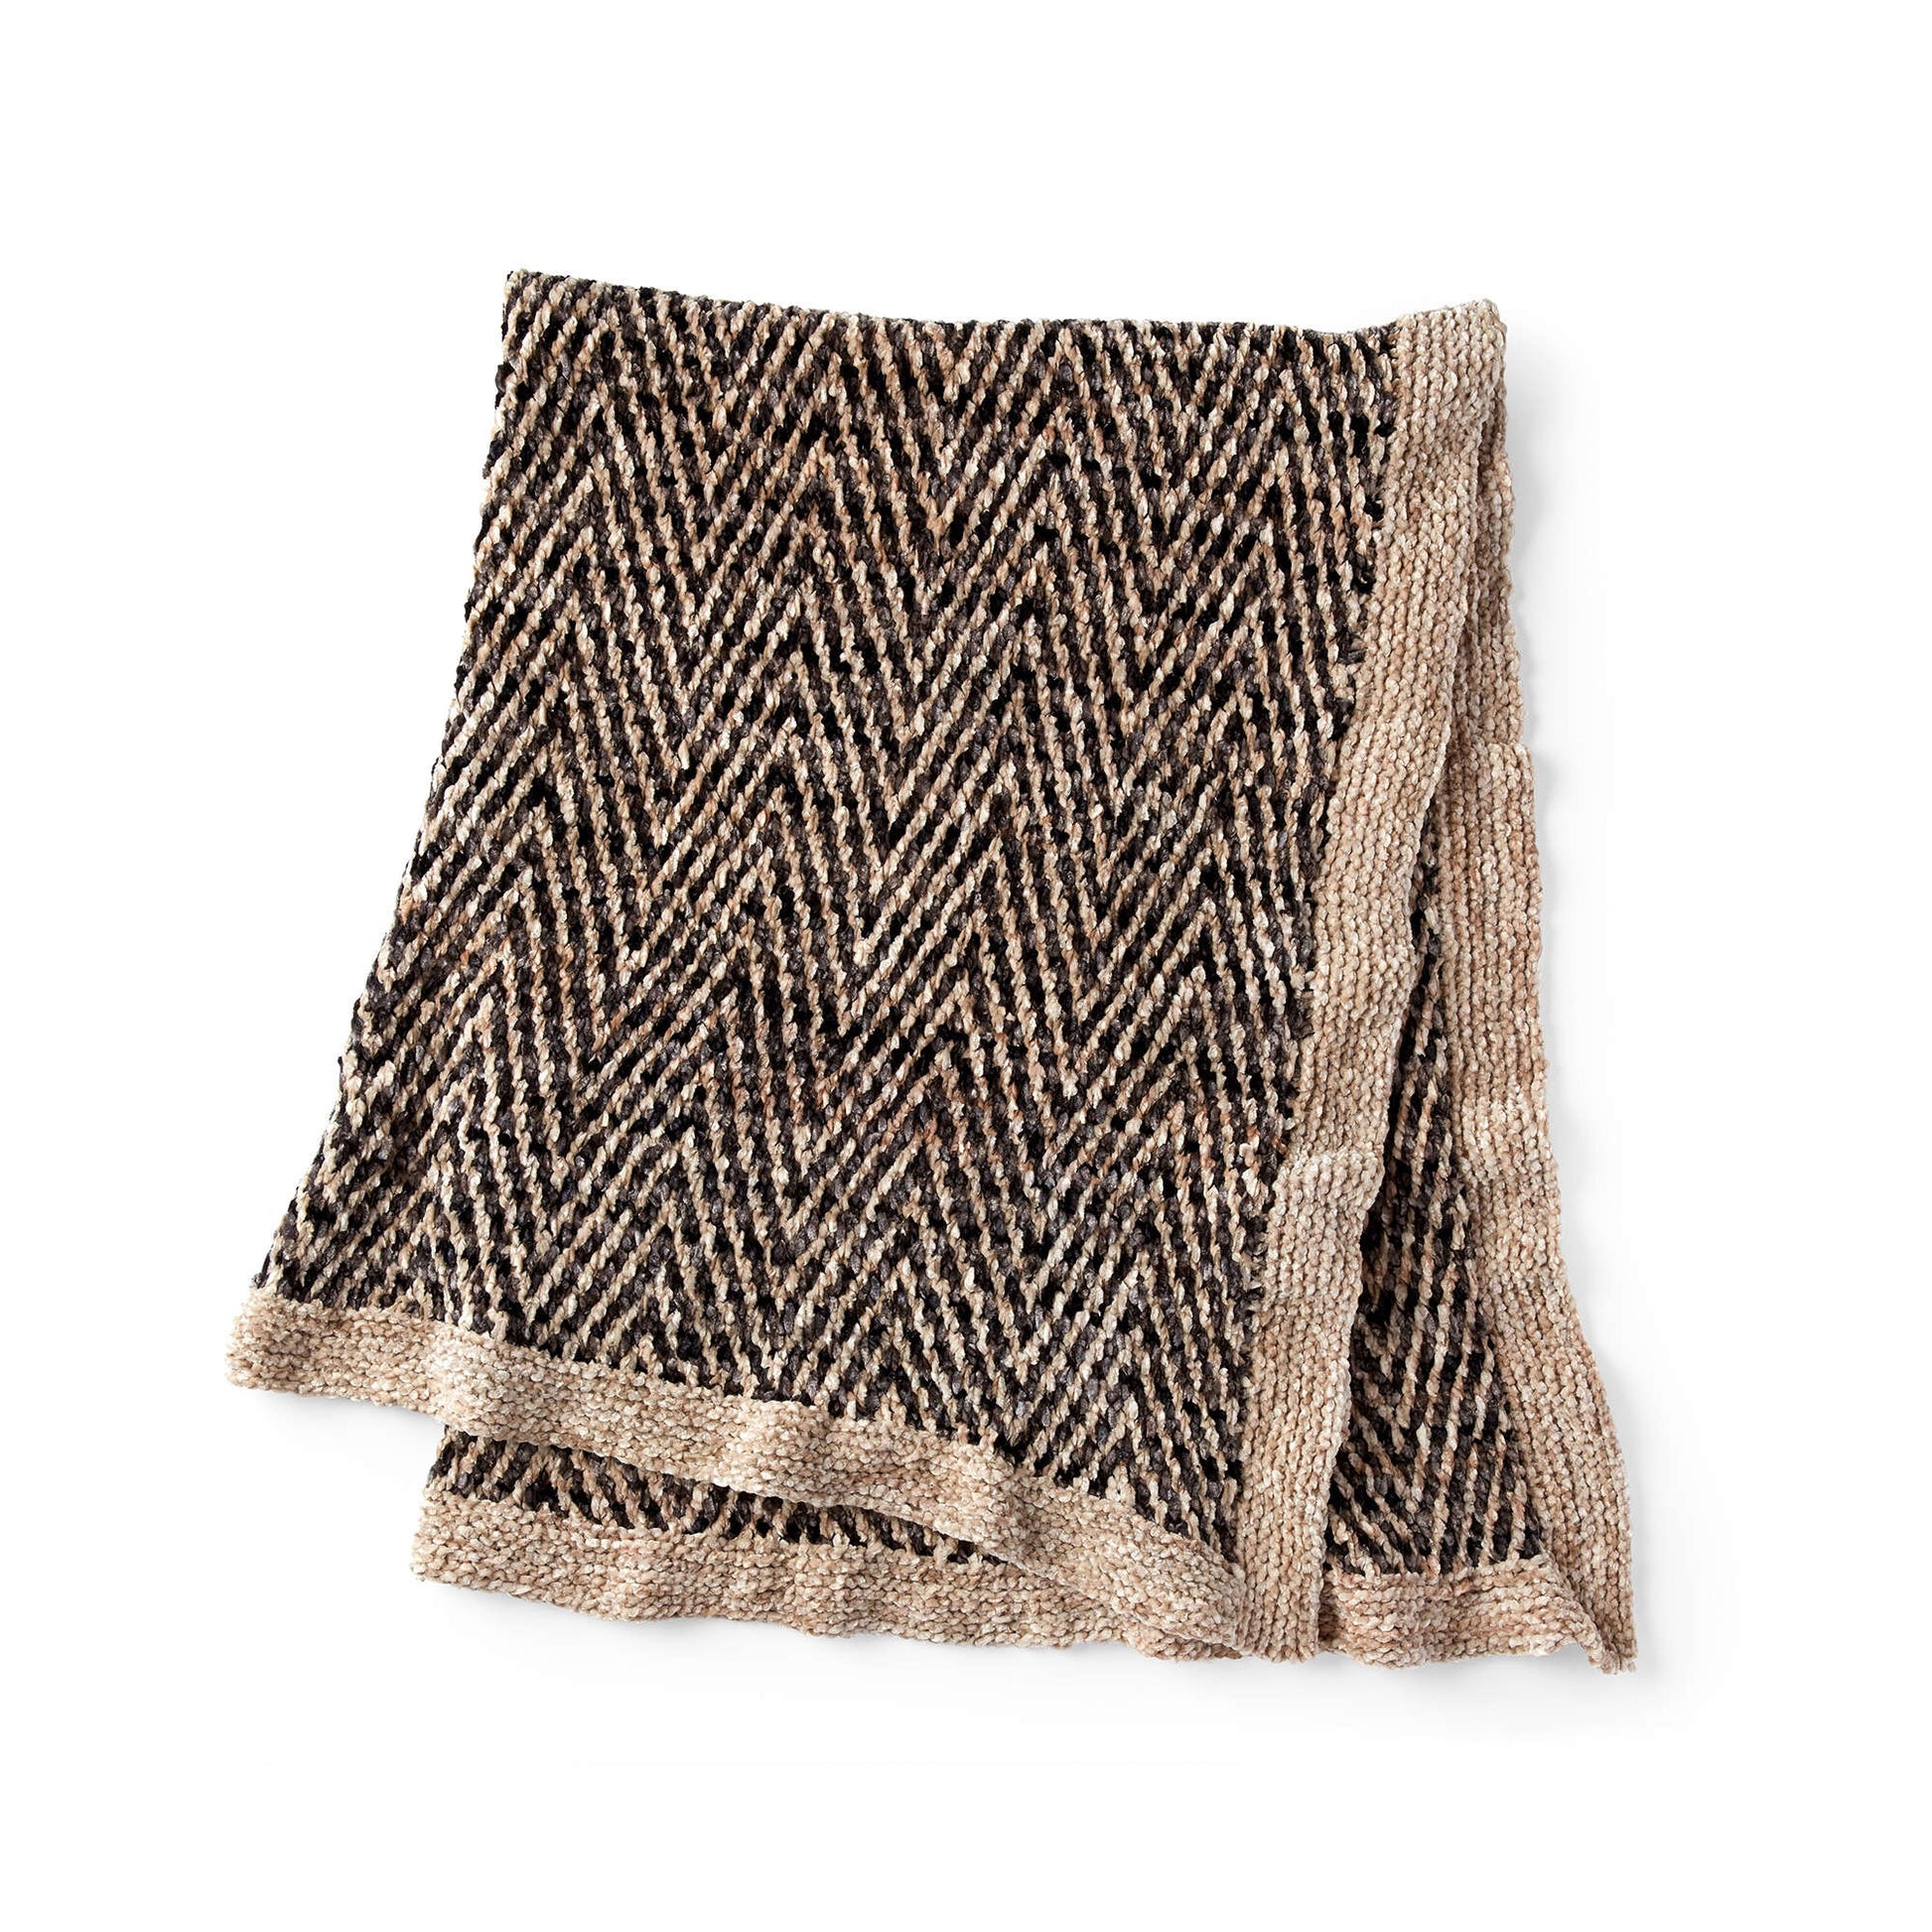 Free Bernat Knit Two Tone Blanket Pattern